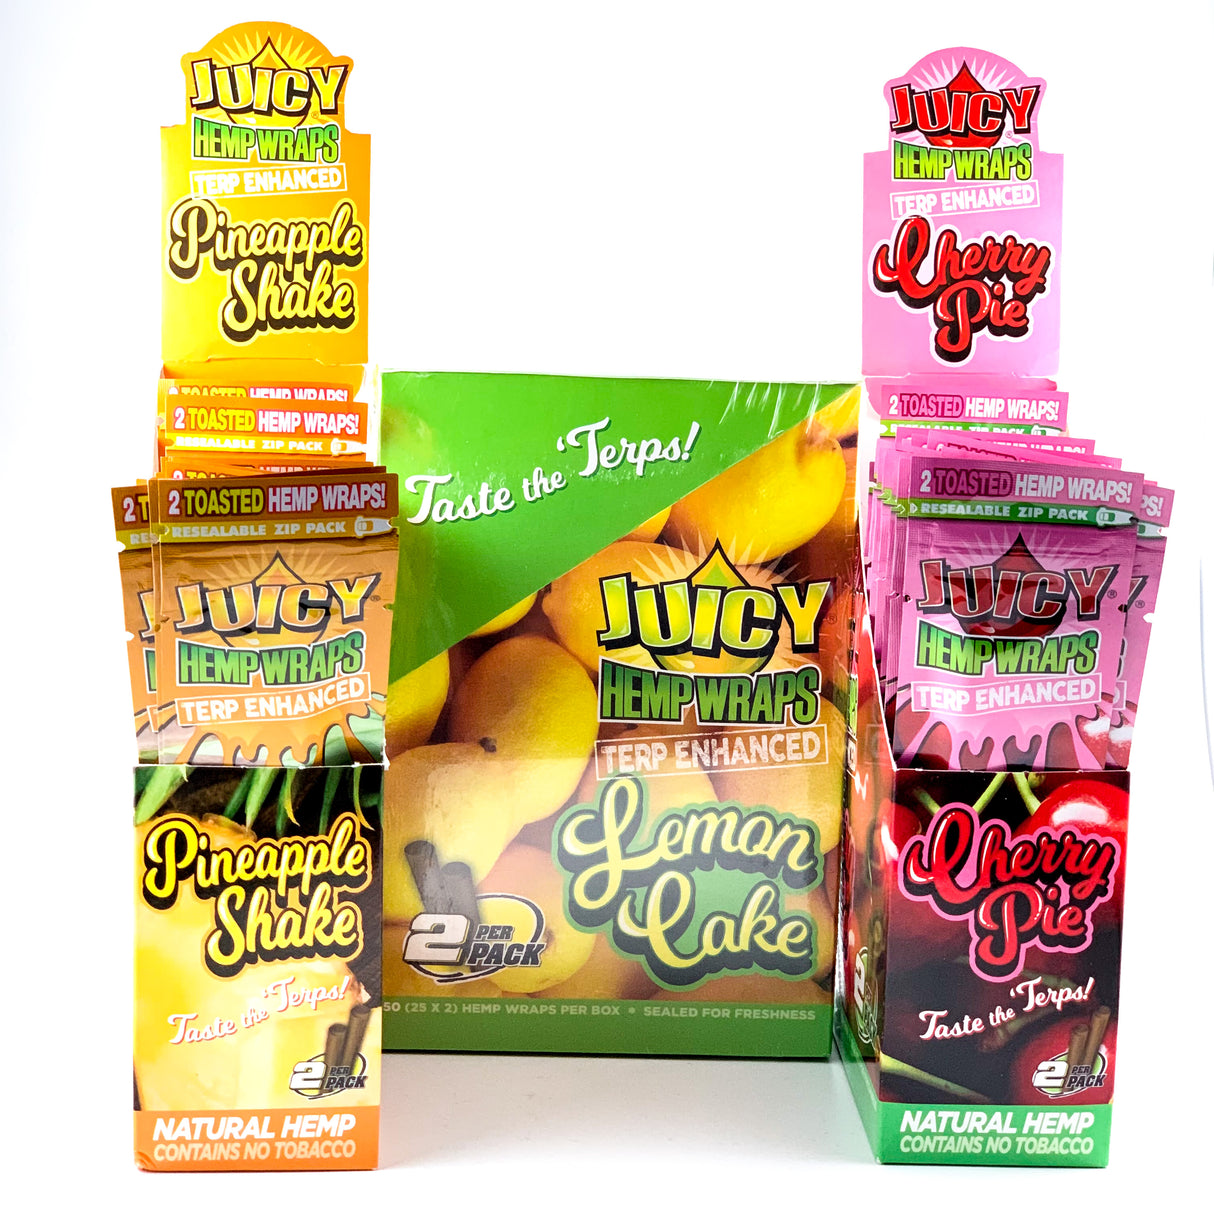 Juicy Hemp Wraps Terp Enhanced 2pck